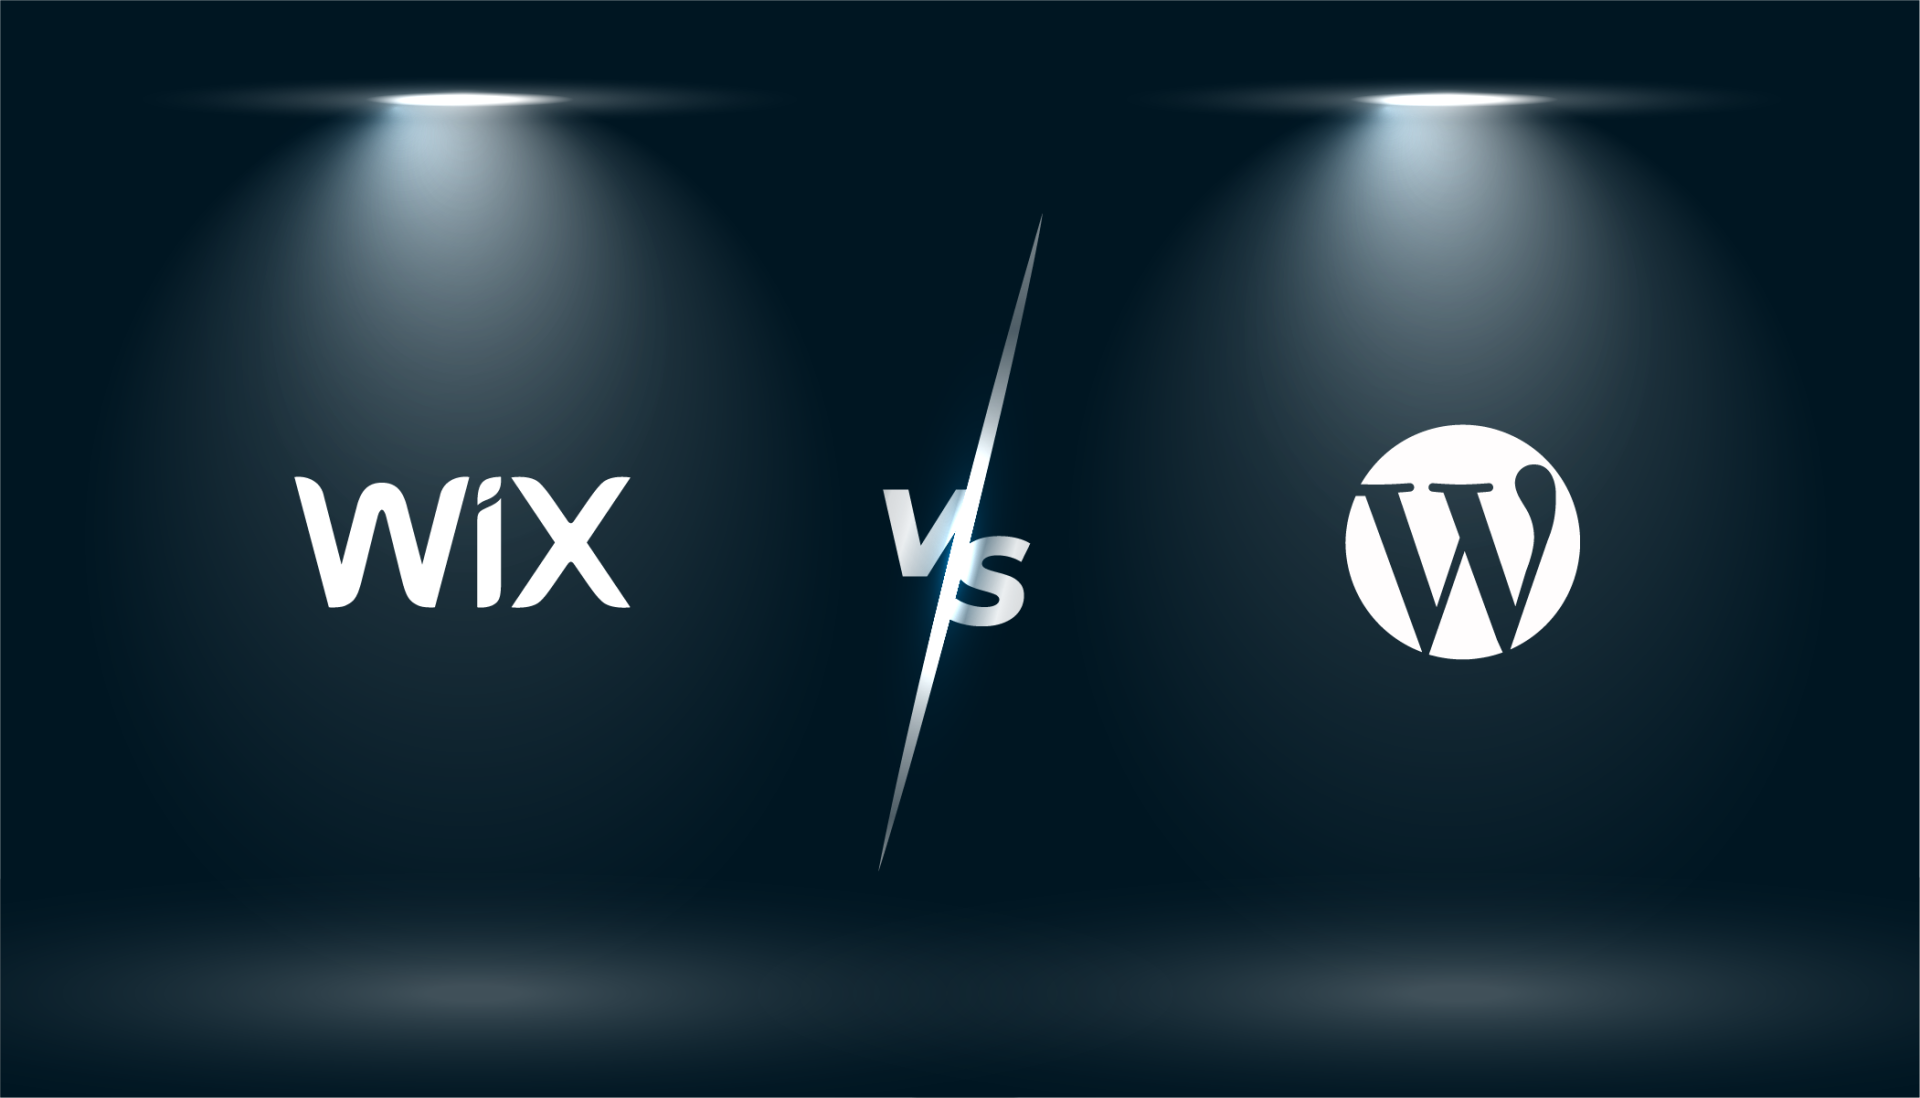 WIX vs WordPress Which One better